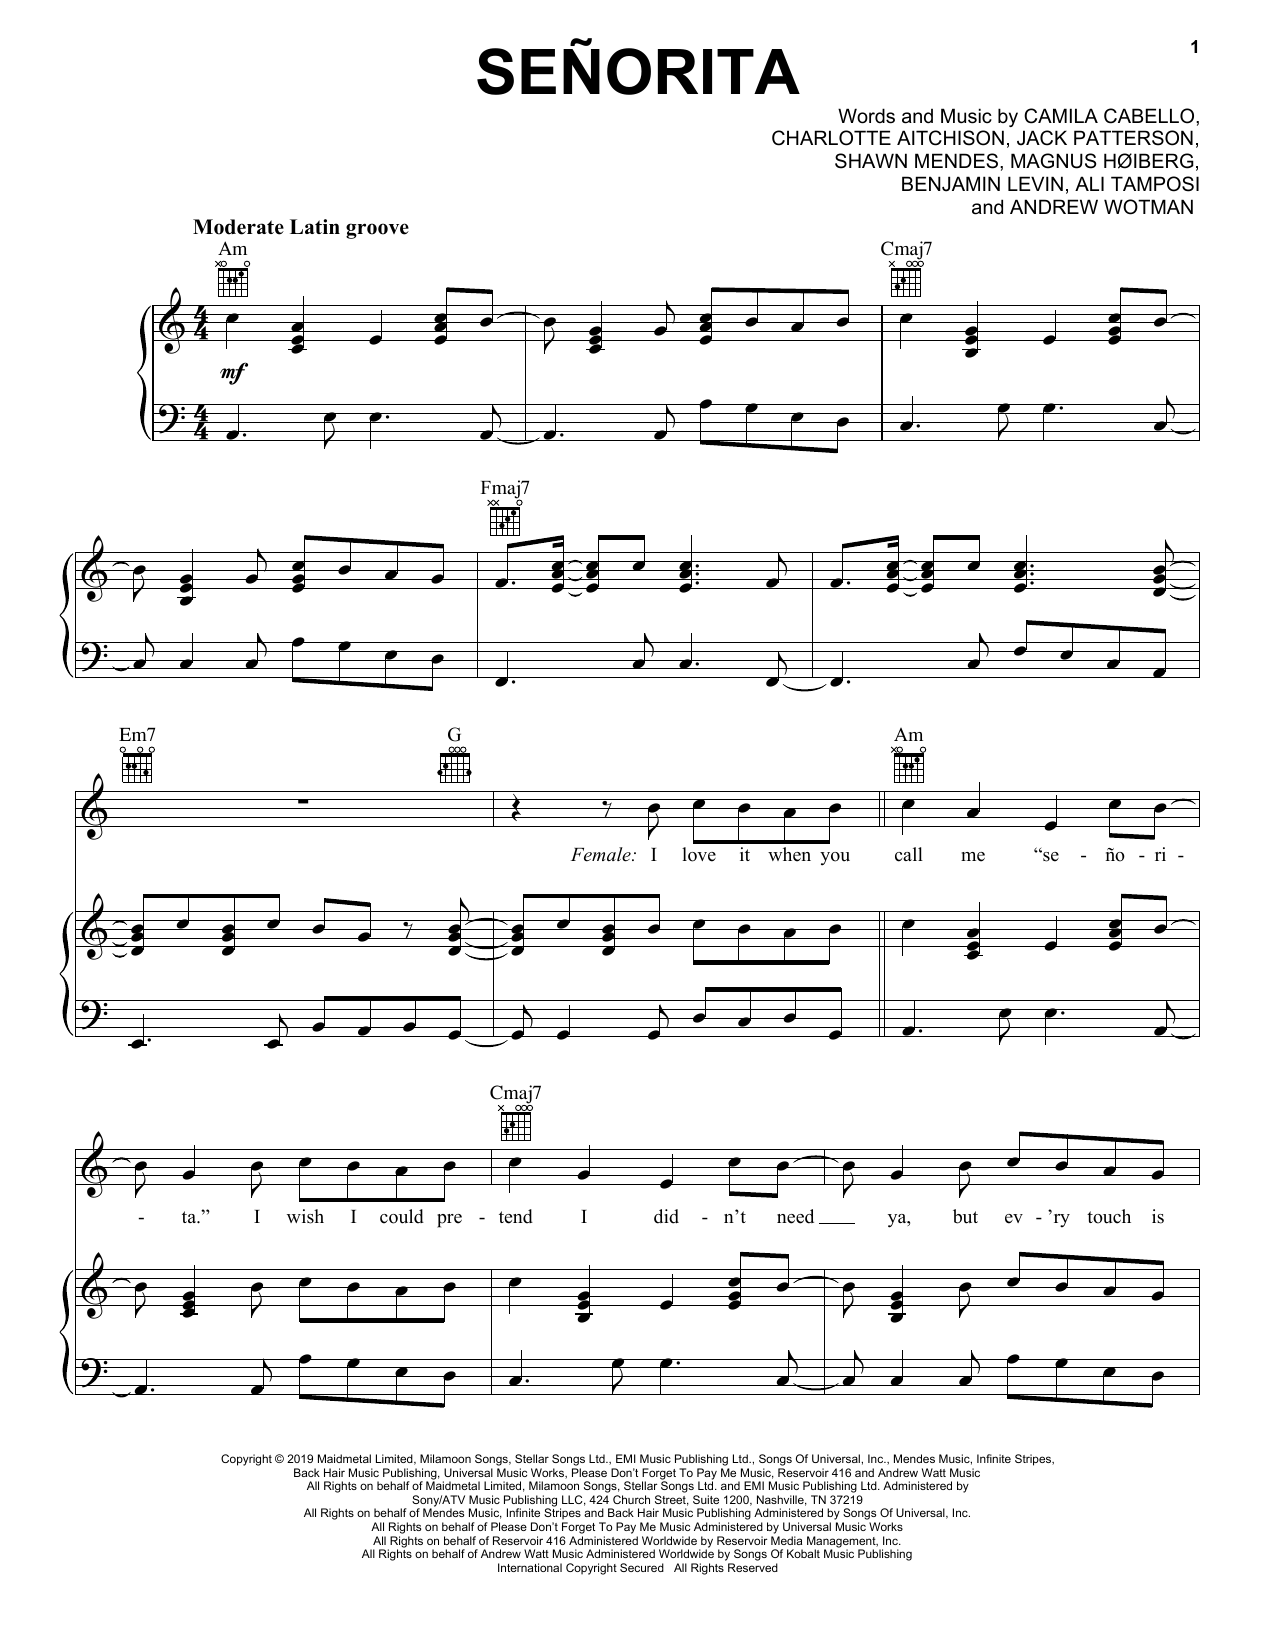 Shawn Mendes & Camila Cabello Señorita Sheet Music Notes & Chords for Bass Guitar Tab - Download or Print PDF